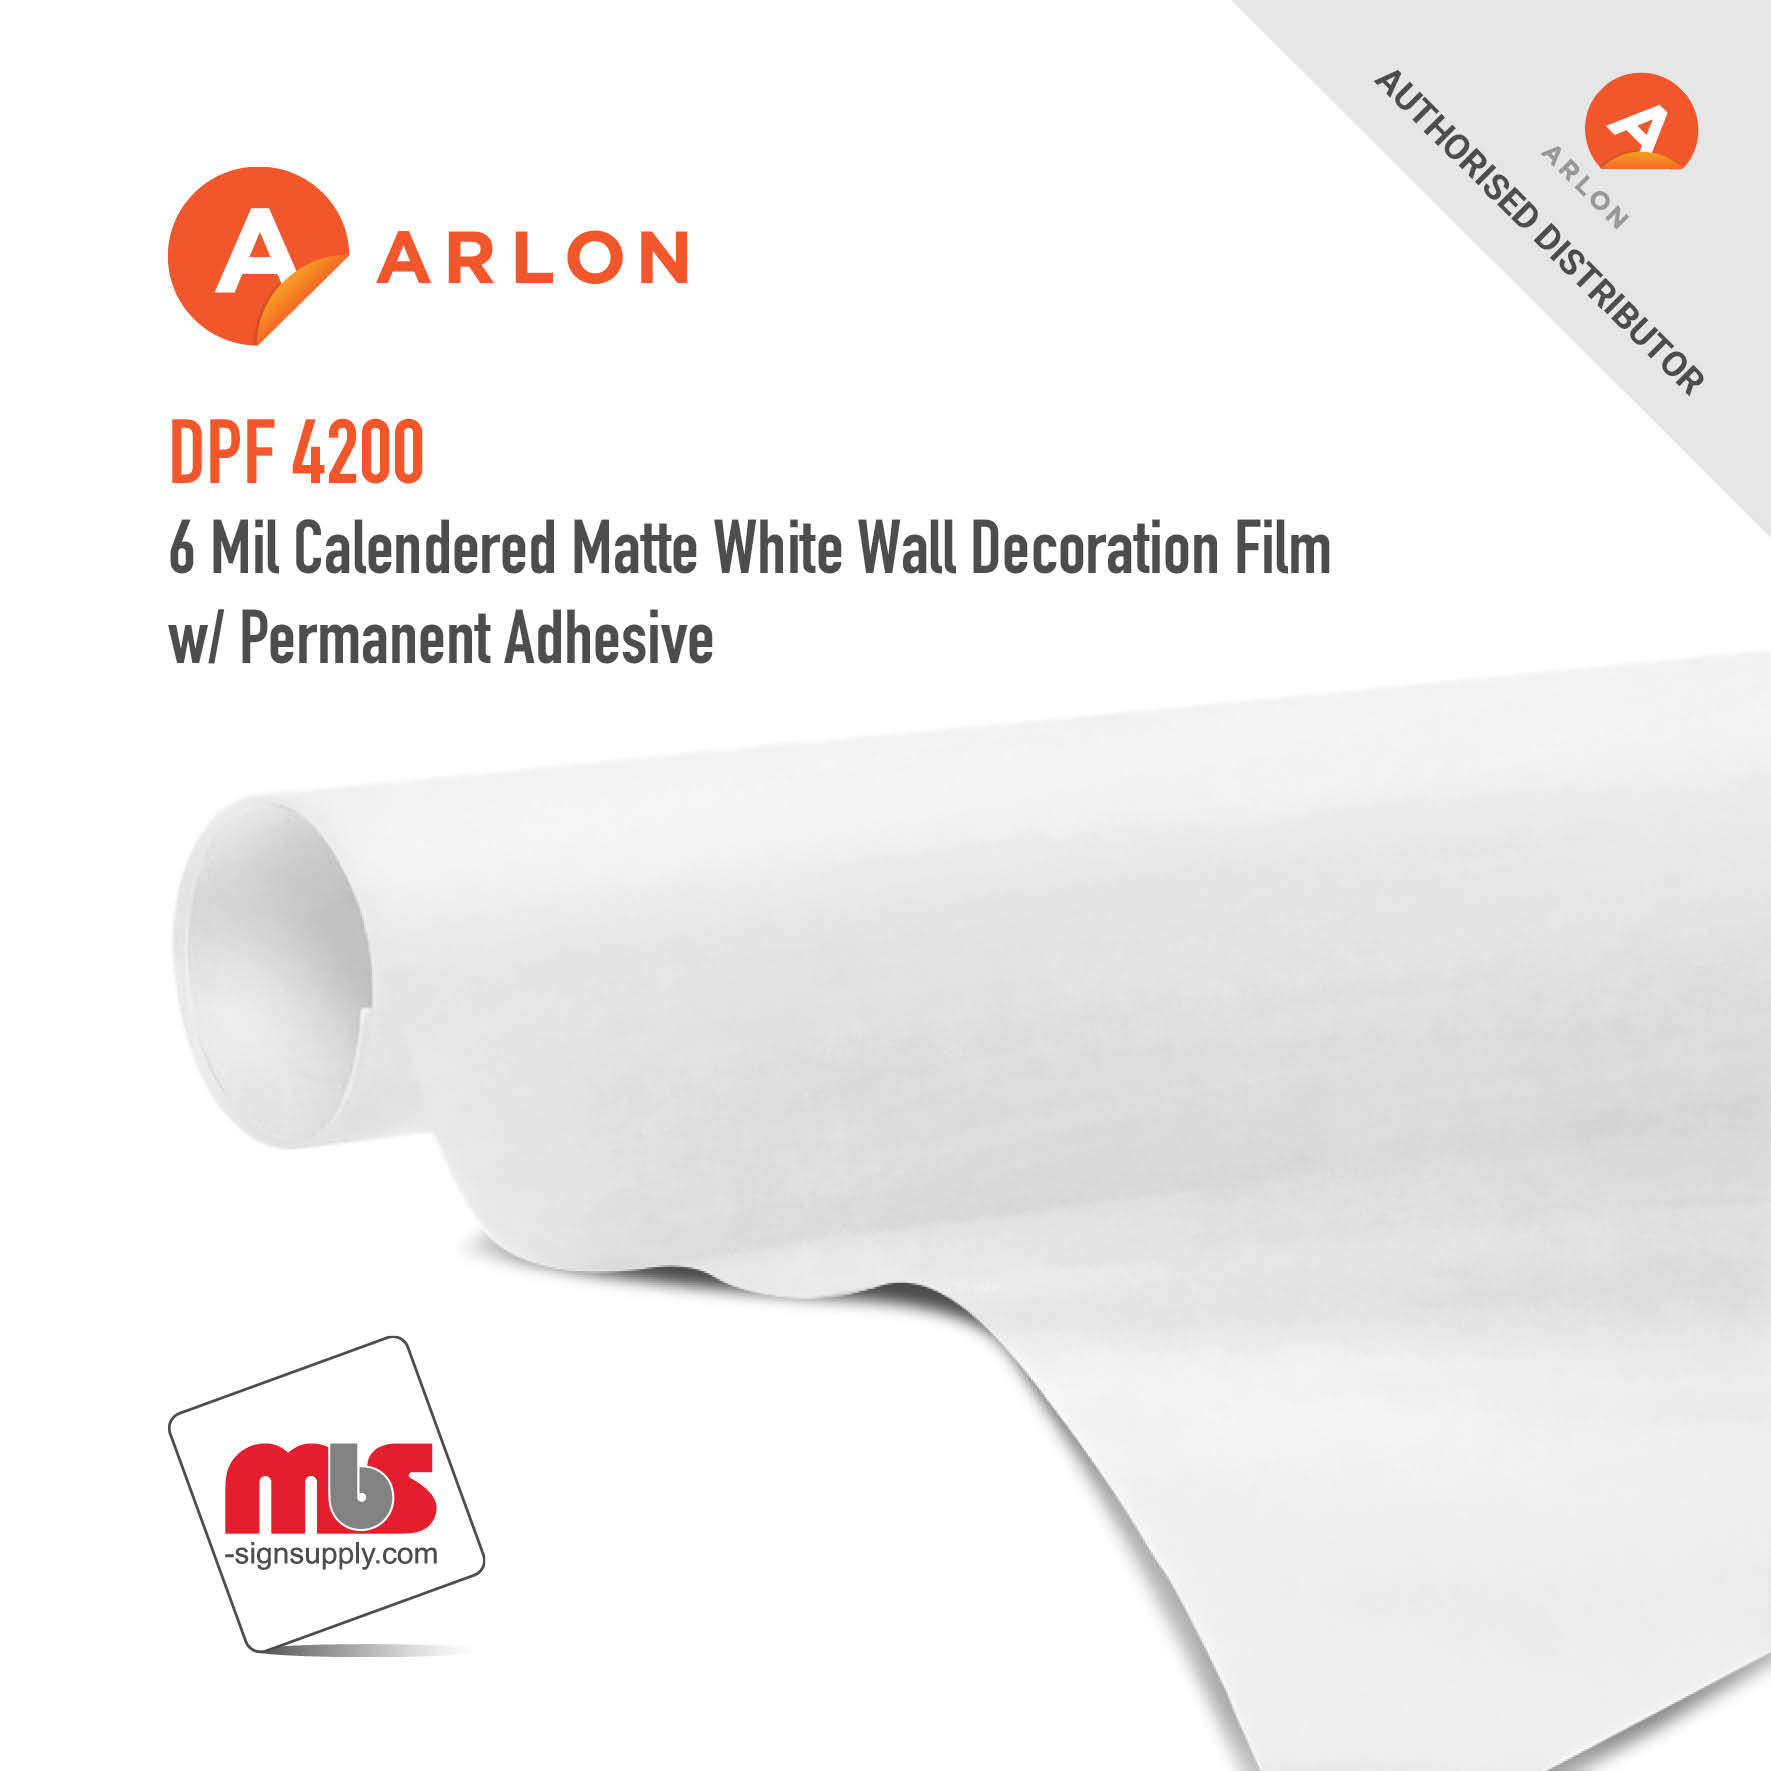 54'' x 50 Yard Roll - Arlon DPF 4200 6 Mil Calendered Matte White Wall Decoration Film w/ Permanent Adhesive